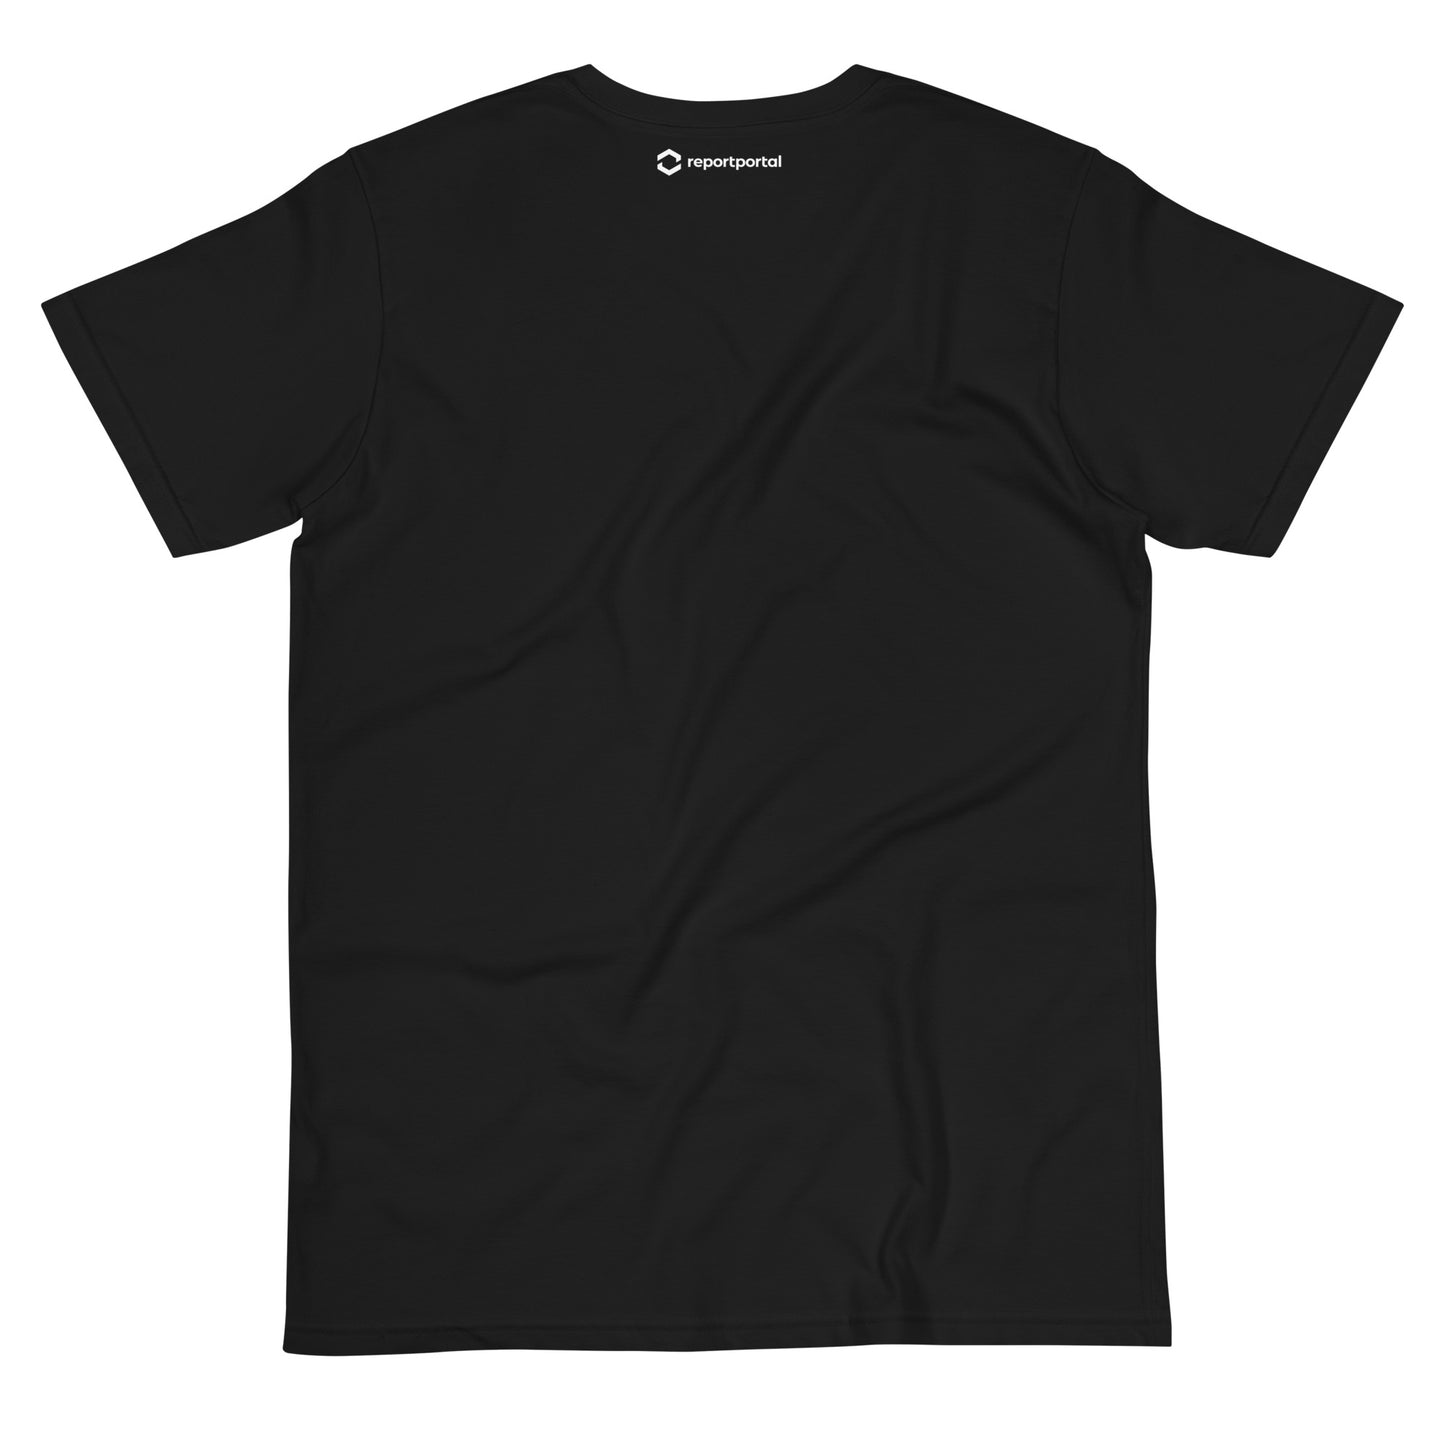 Report Portalus — Unisex T-Shirt